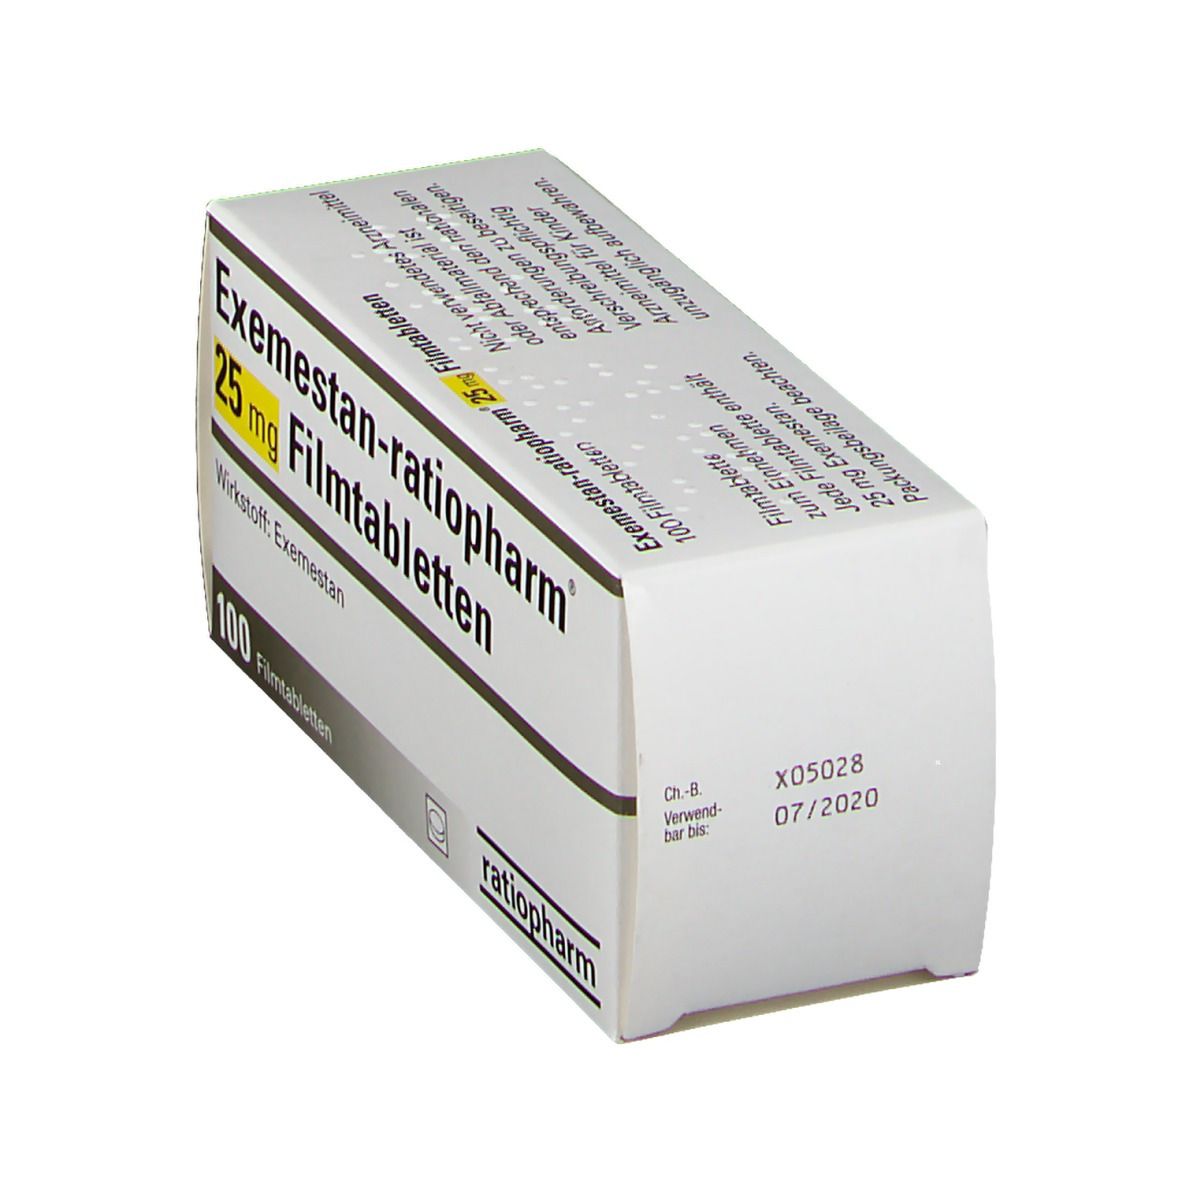 Exemestan-ratiopharm® 25 mg